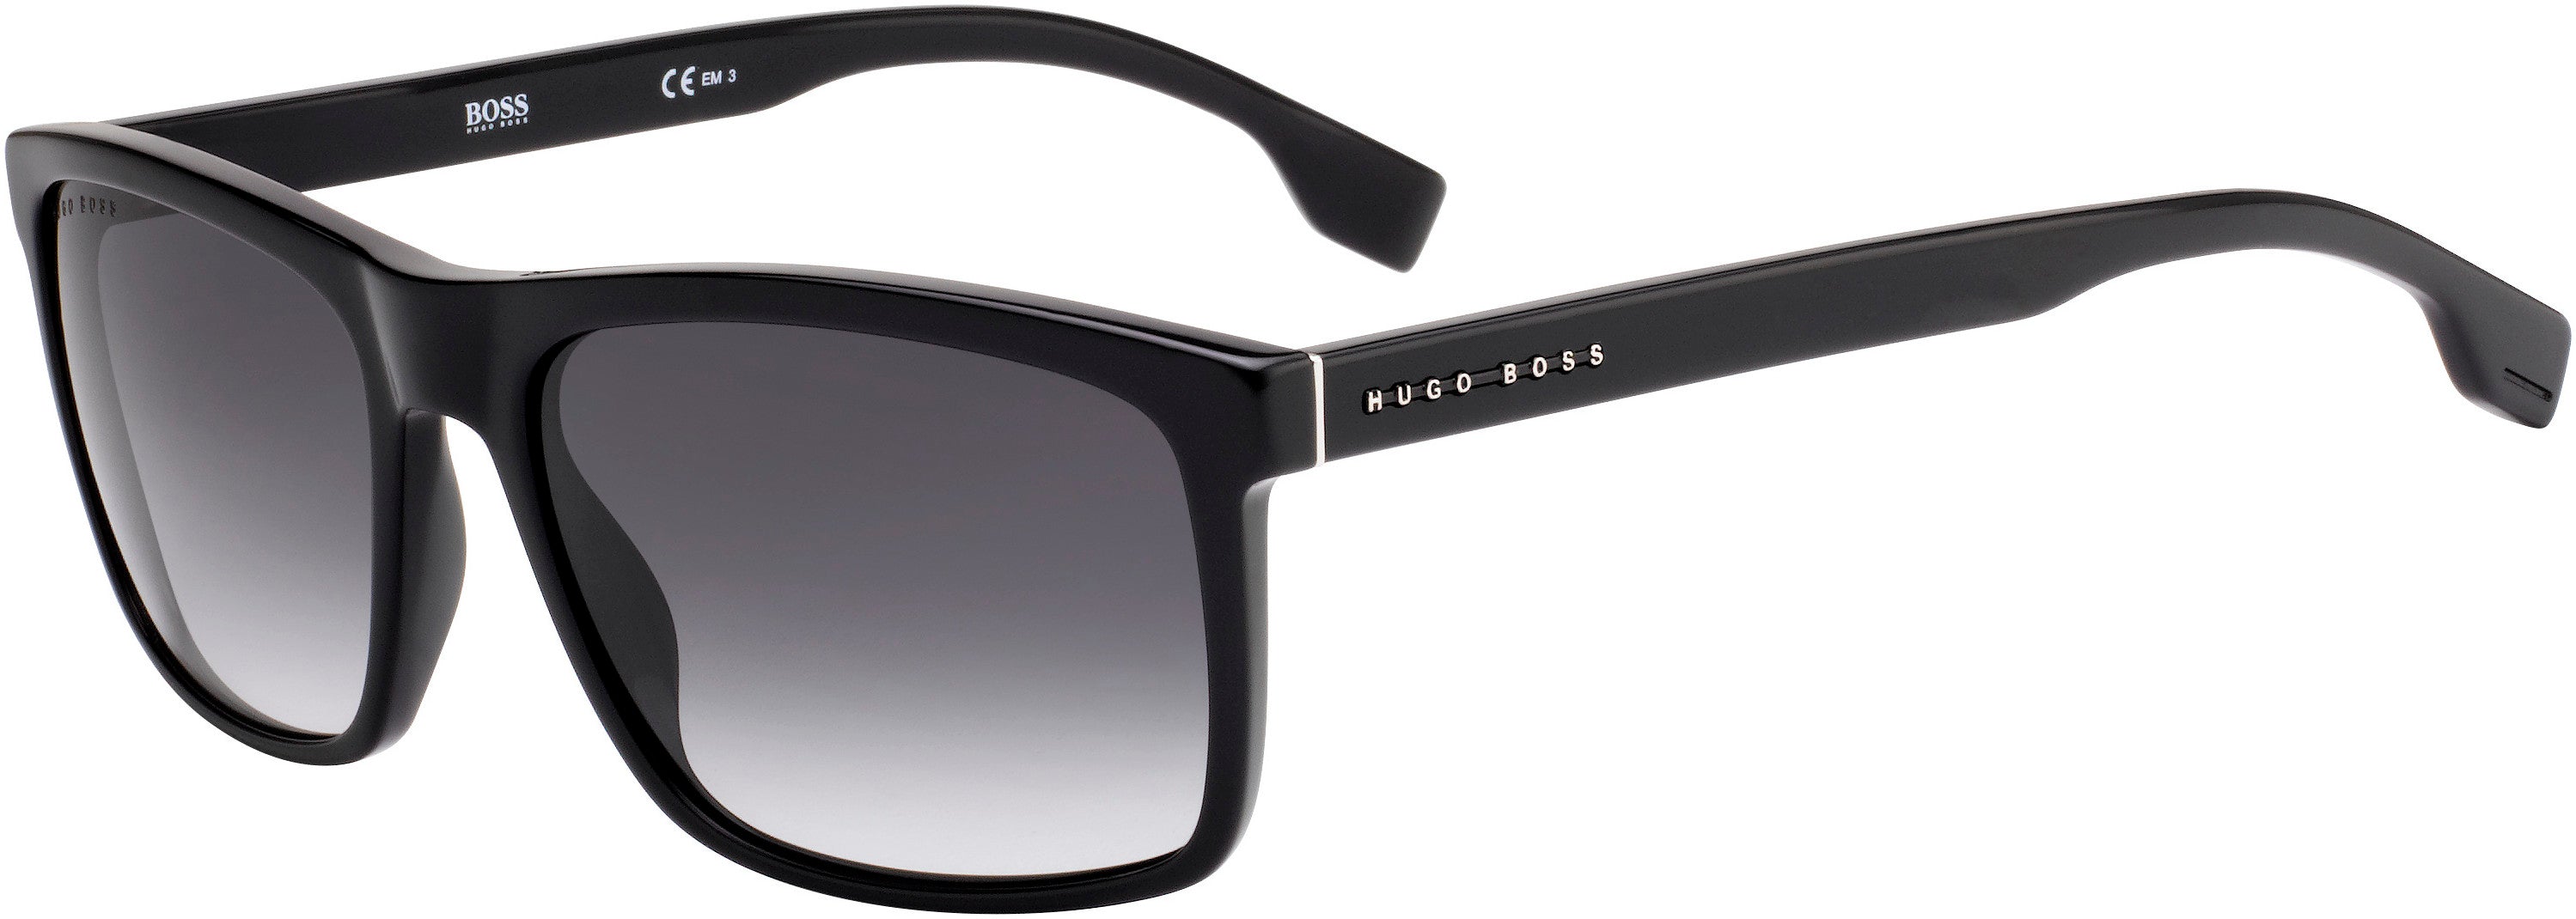 Boss (hub) Boss 1036/S Rectangular Sunglasses 0807-0807  Black (9O Dark Gray Gradient)